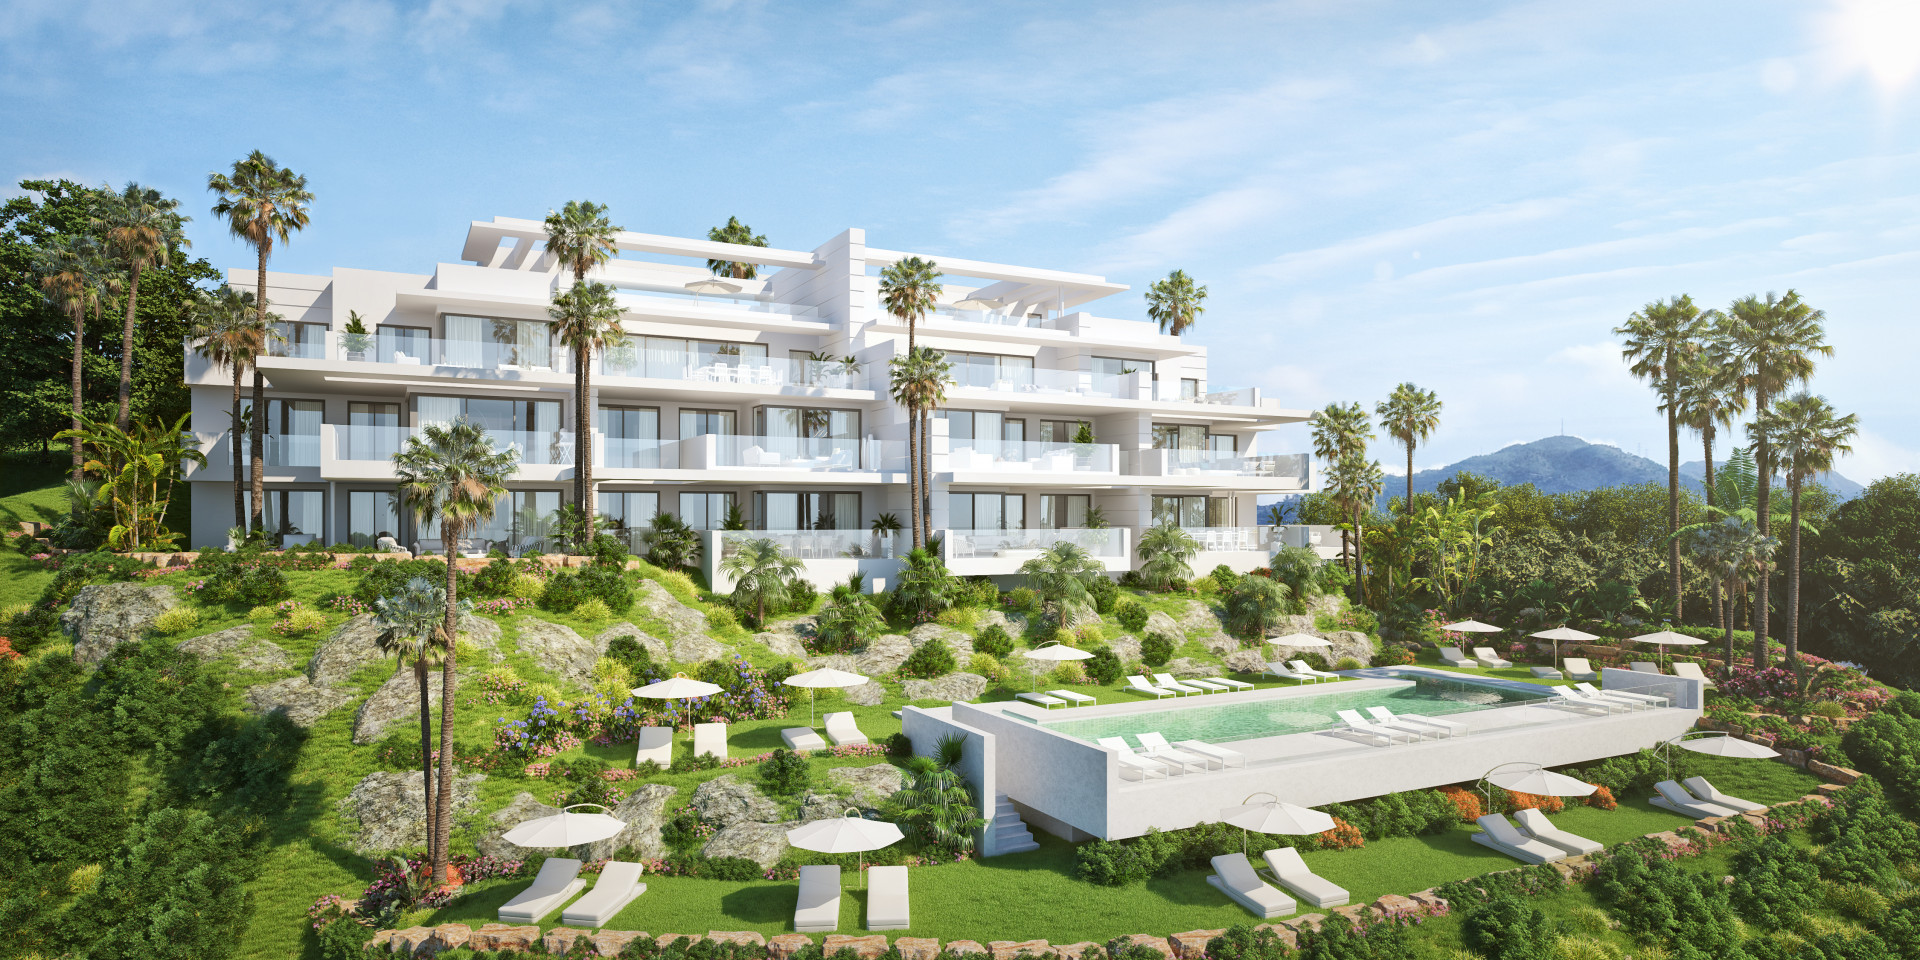 Small luxury residence designed by Villarroel Torrico in Marbella